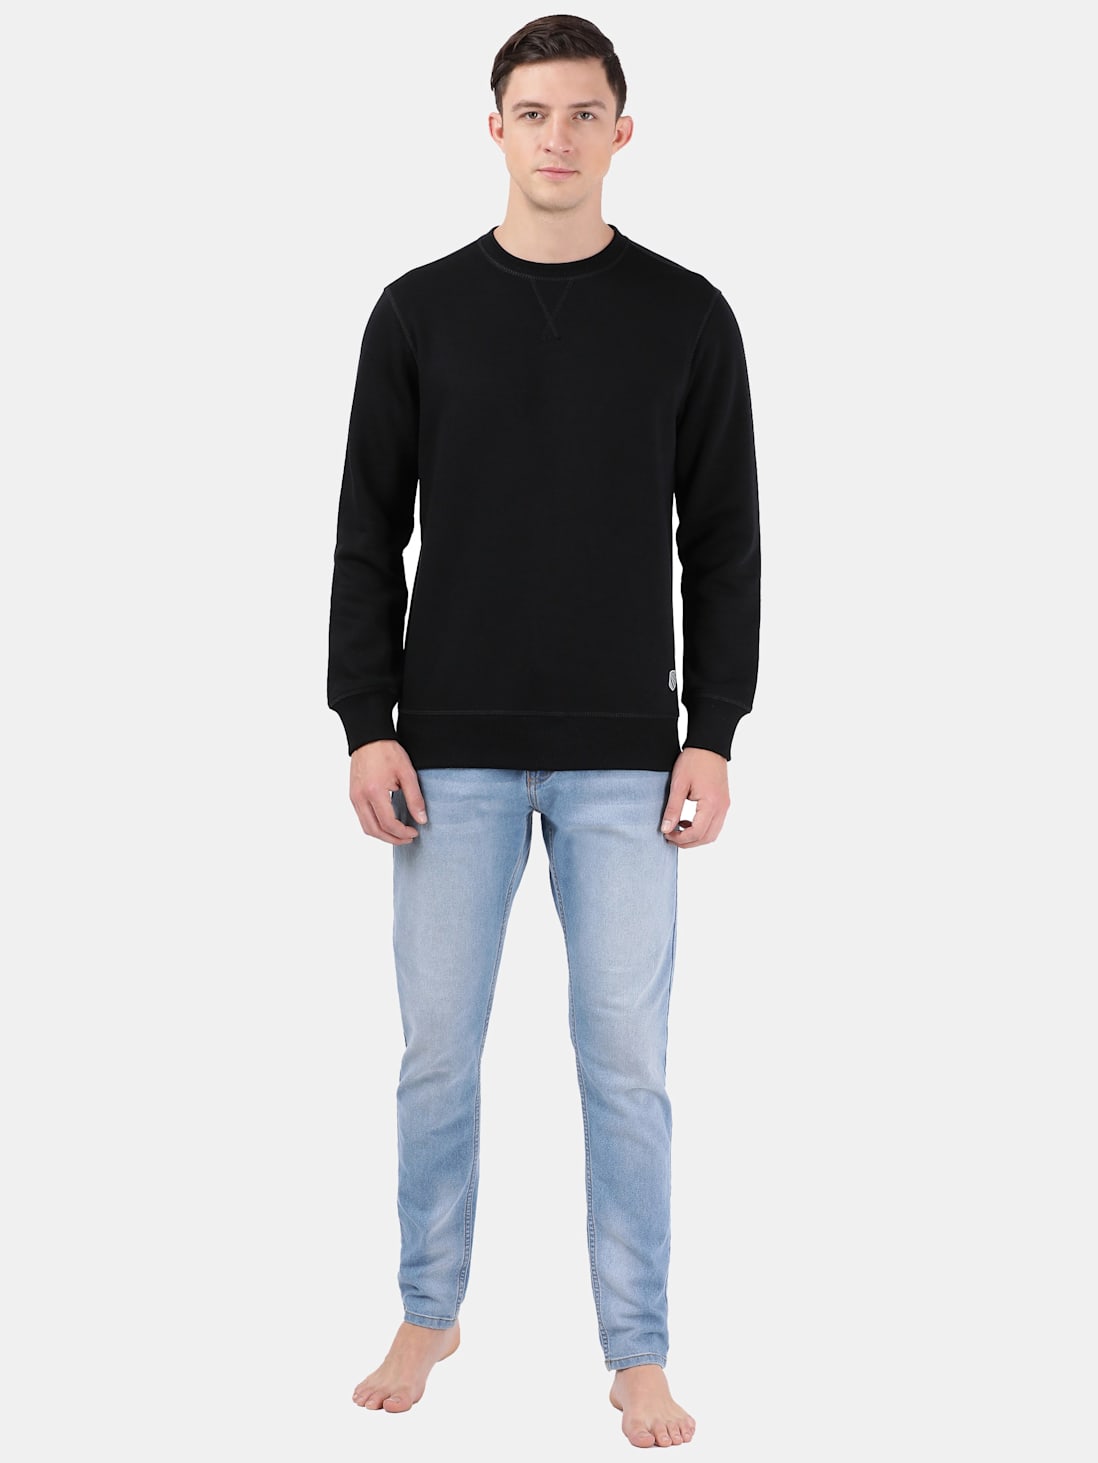 Buy Men's Super Combed Cotton Rich Fleece Fabric Sweatshirt with Stay ...